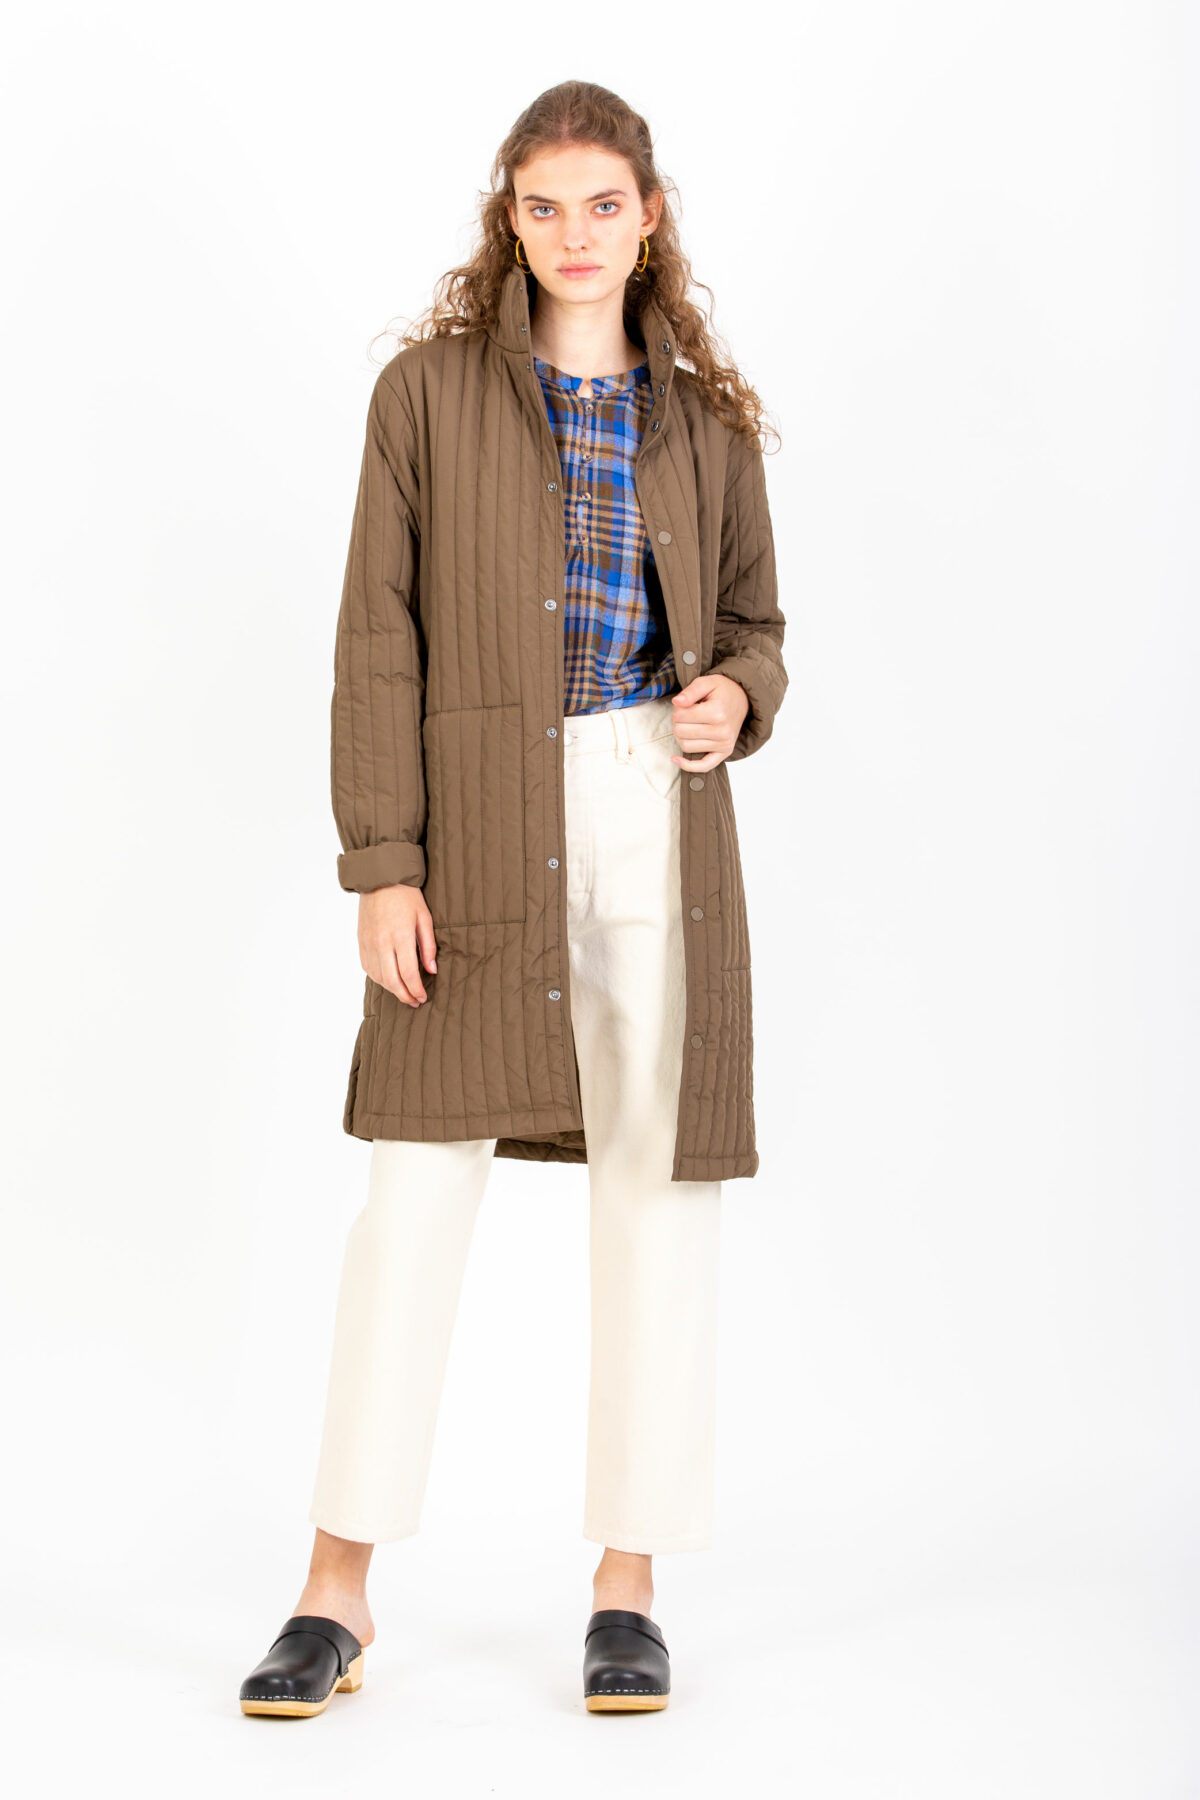 long-wood-liner-jacket-outerwear-rains-matchboxathens